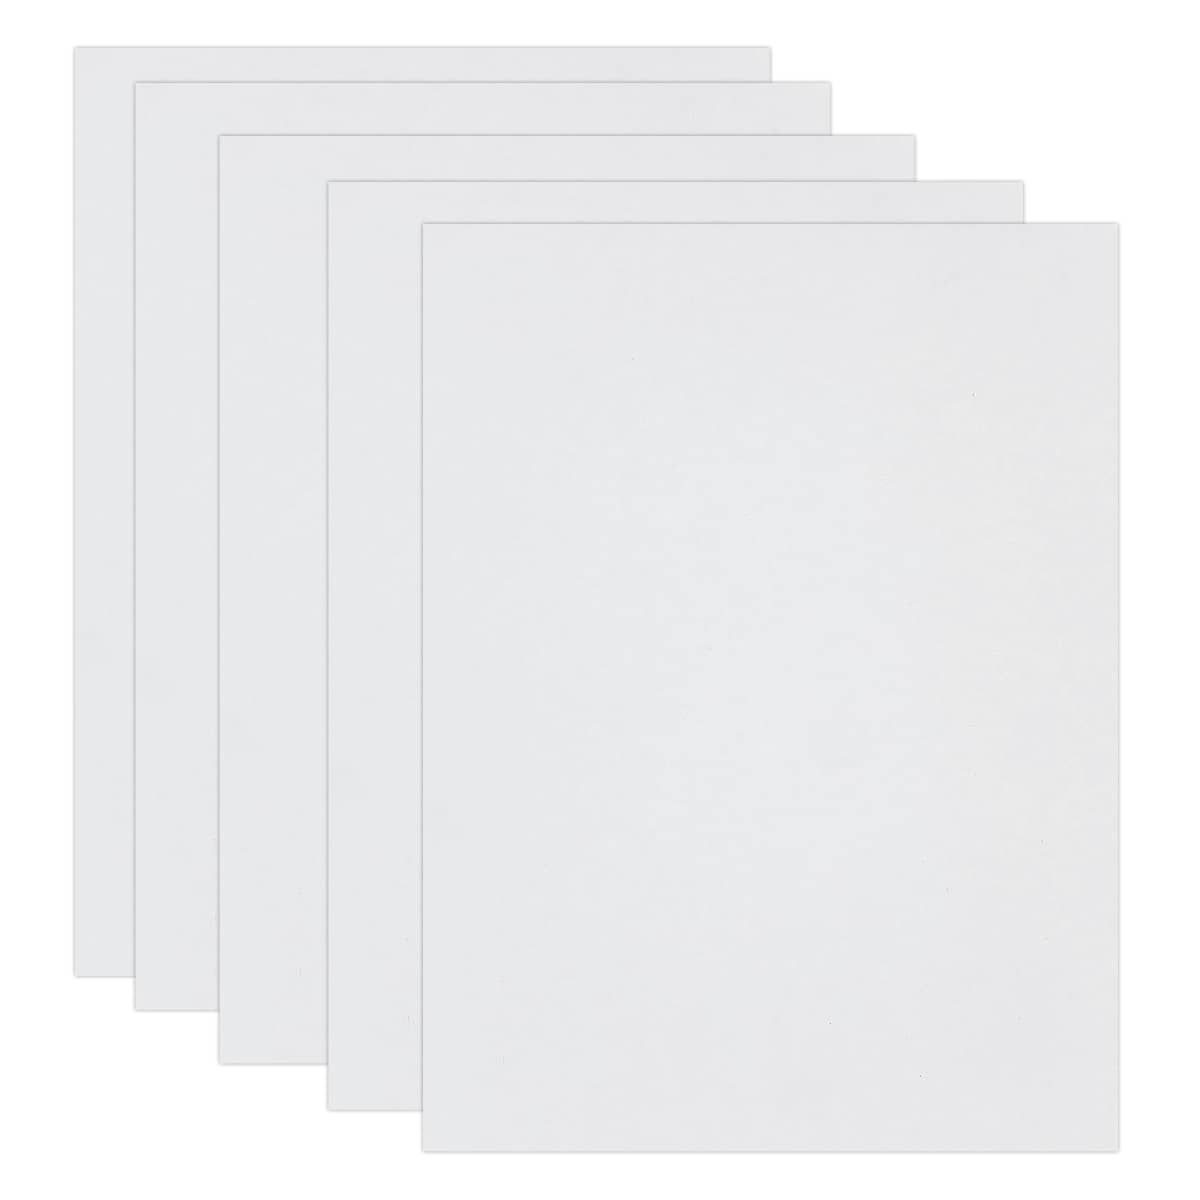 Multimedia Artboard 8" x 10", White, Pack of 5